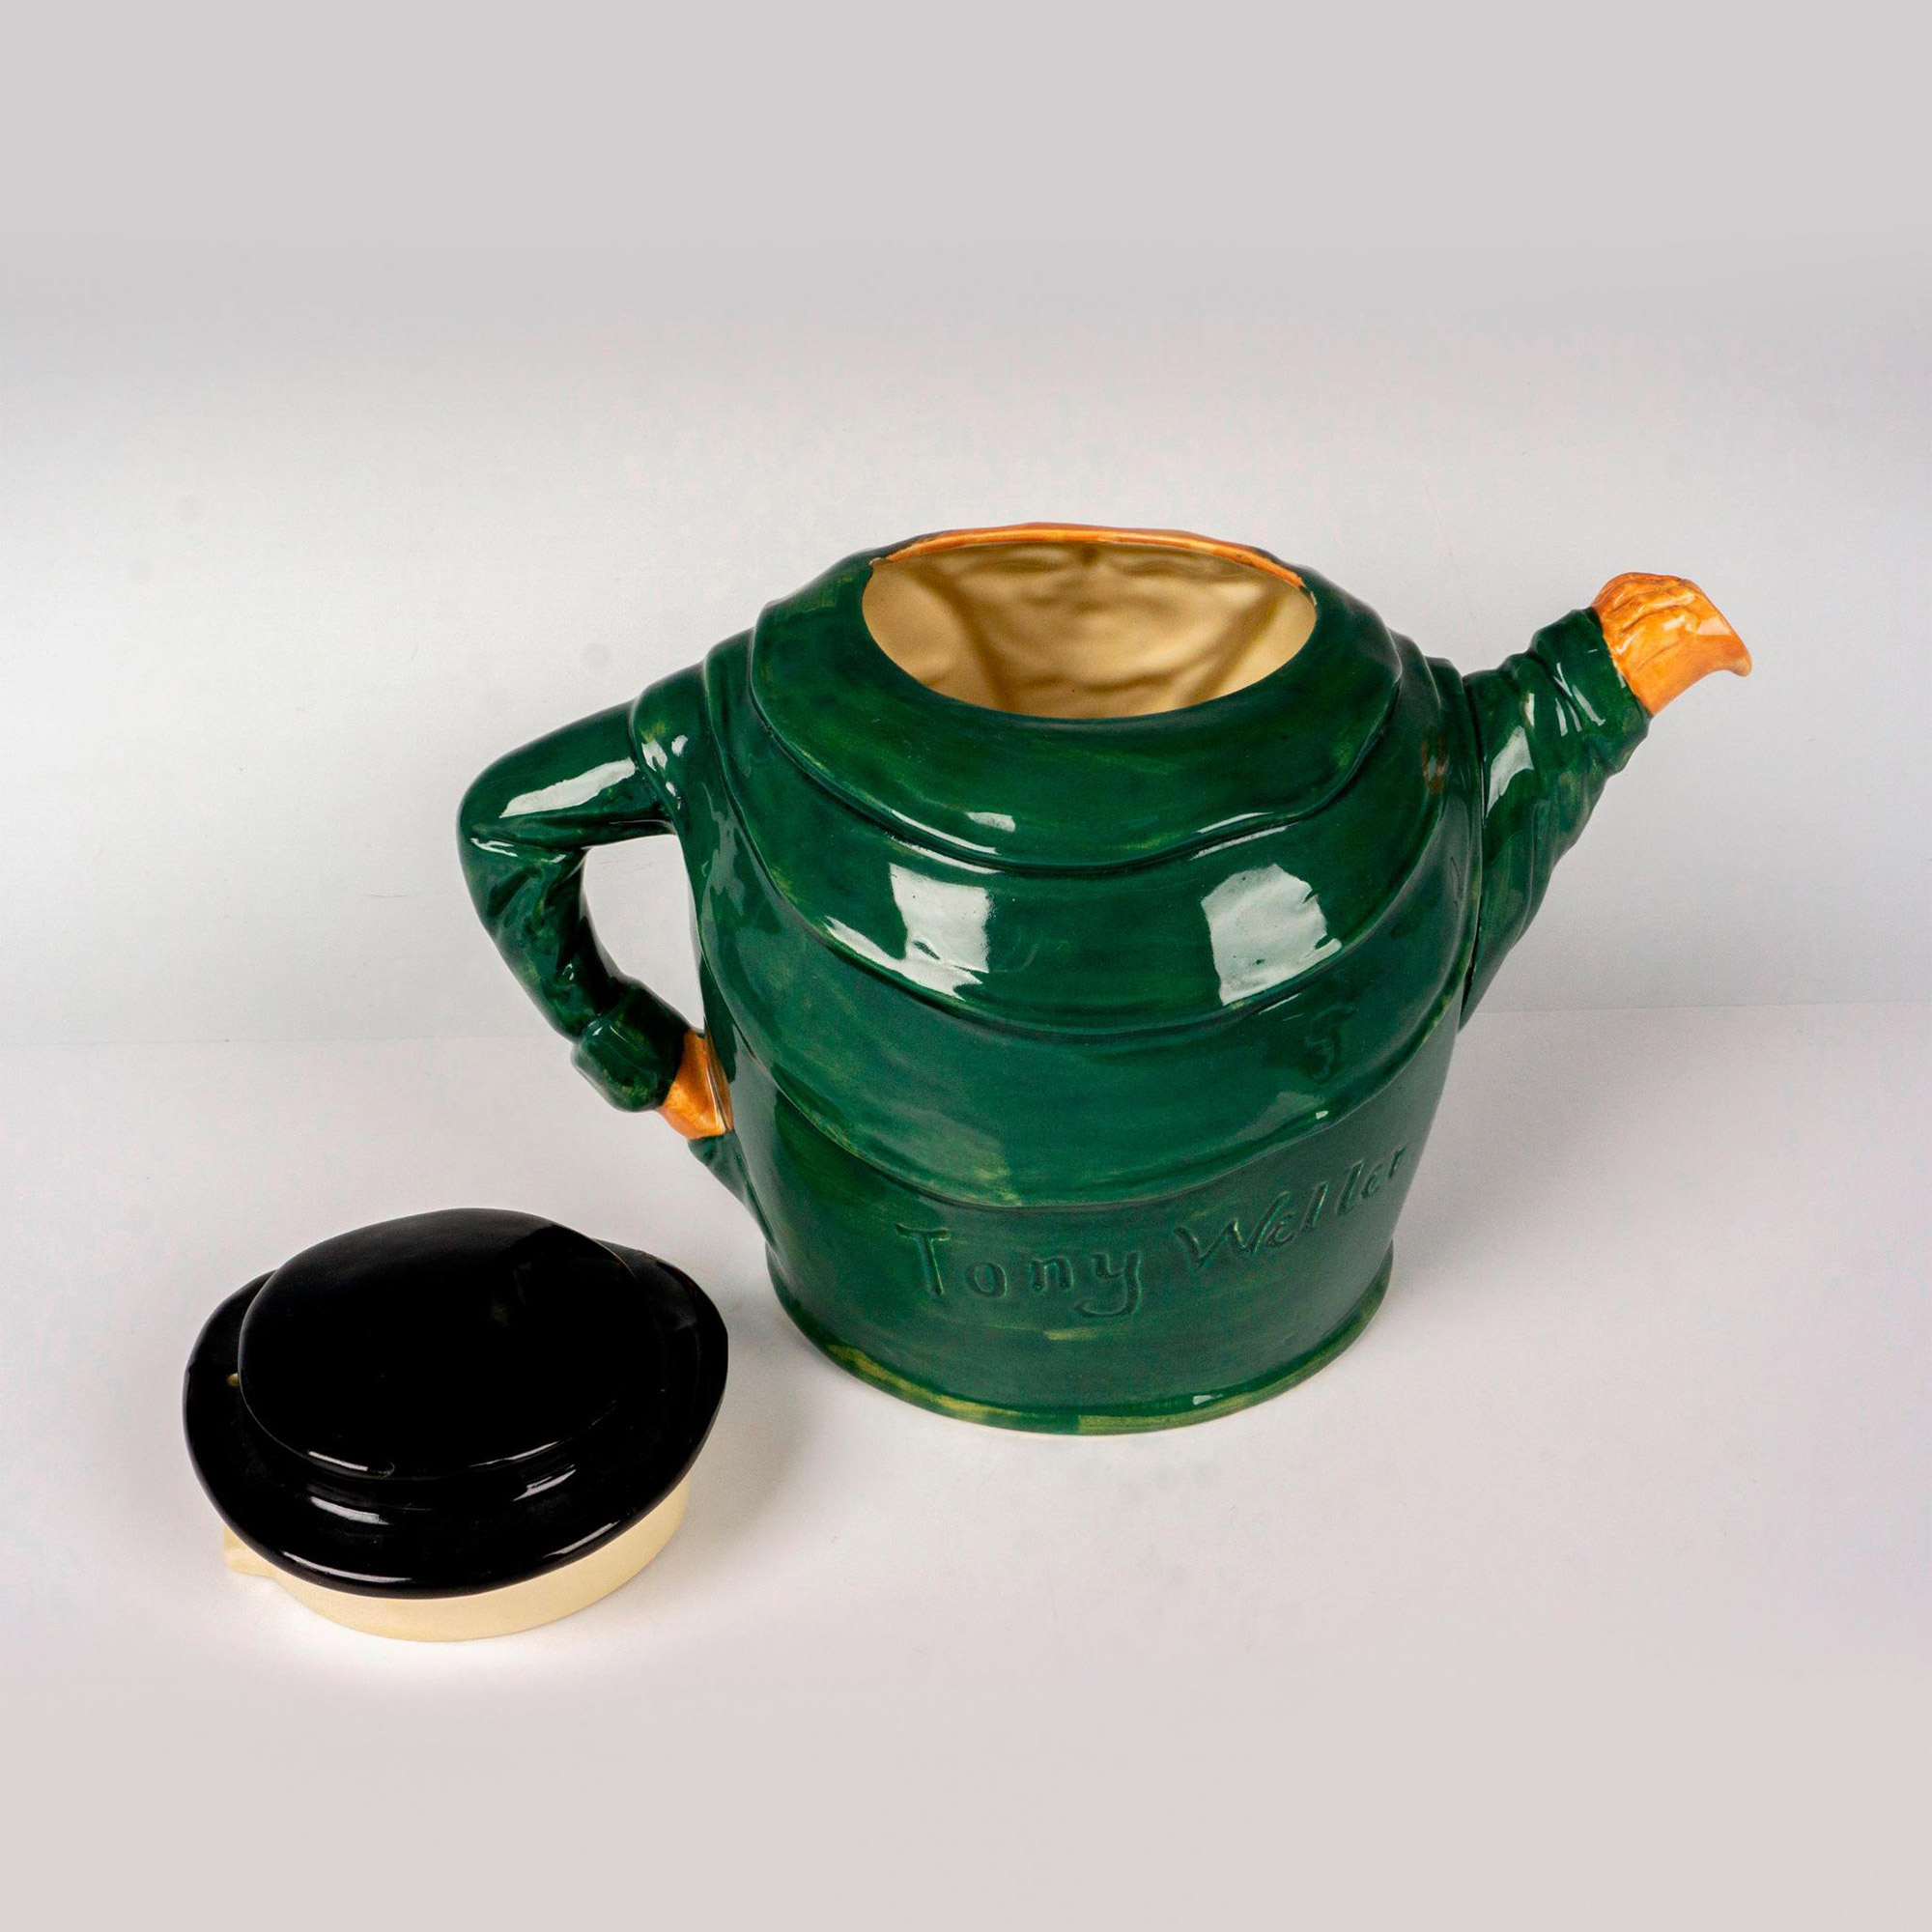 Royal Doulton Teapot, Tony Weller D6016 - Image 2 of 3